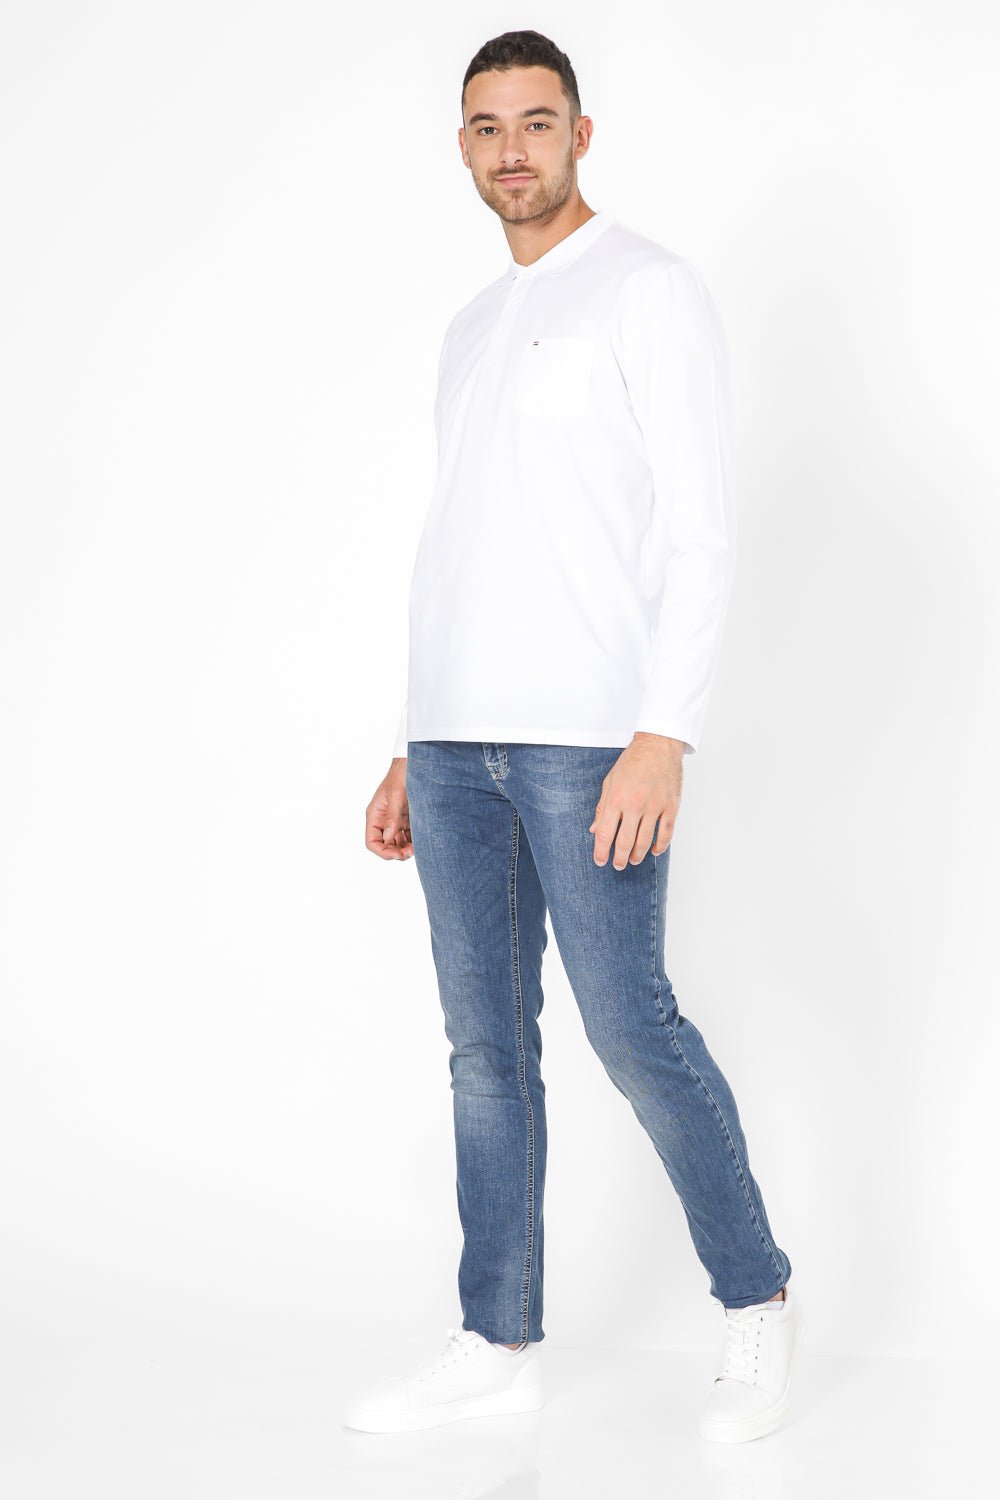 SCORCHER - חולצת פולו ארוכה בצבע לבן - MASHBIR//365